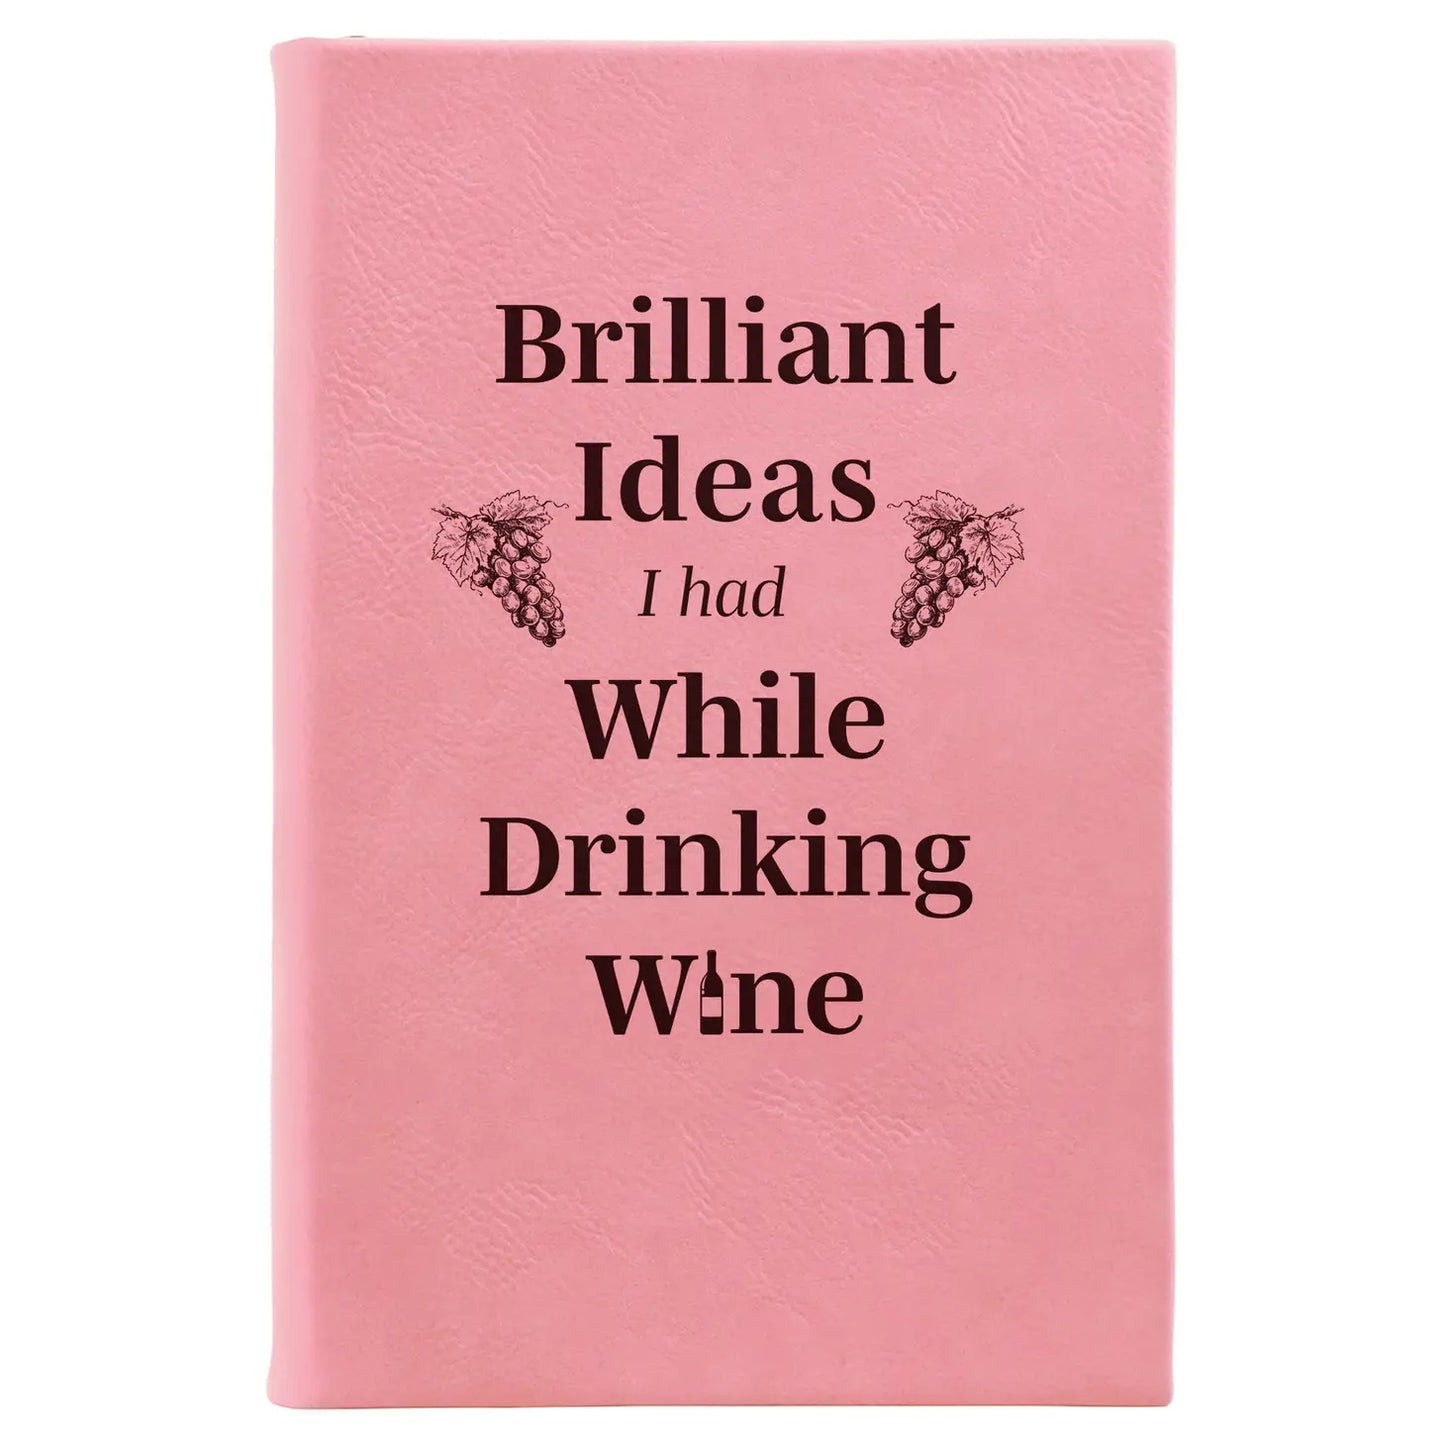 Brilliant Ideas Journal